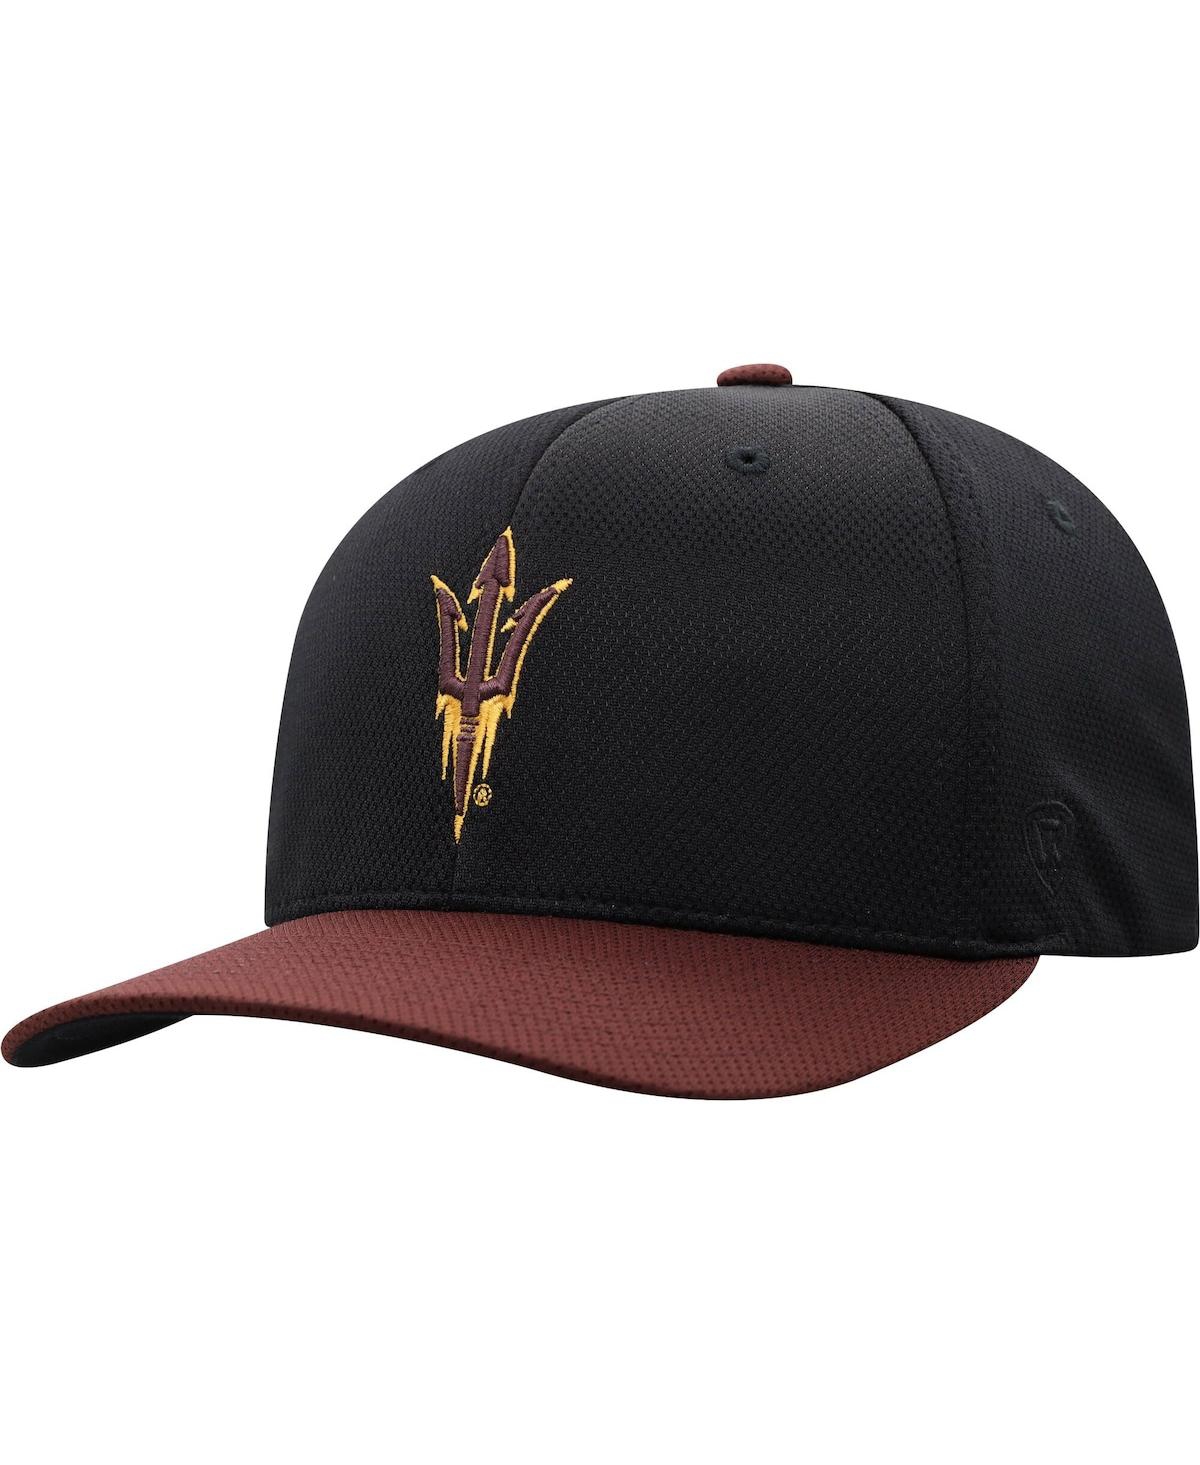 Shop Top Of The World Men's  Black, Maroon Arizona State Sun Devils Two-tone Reflex Hybrid Tech Flex Hat